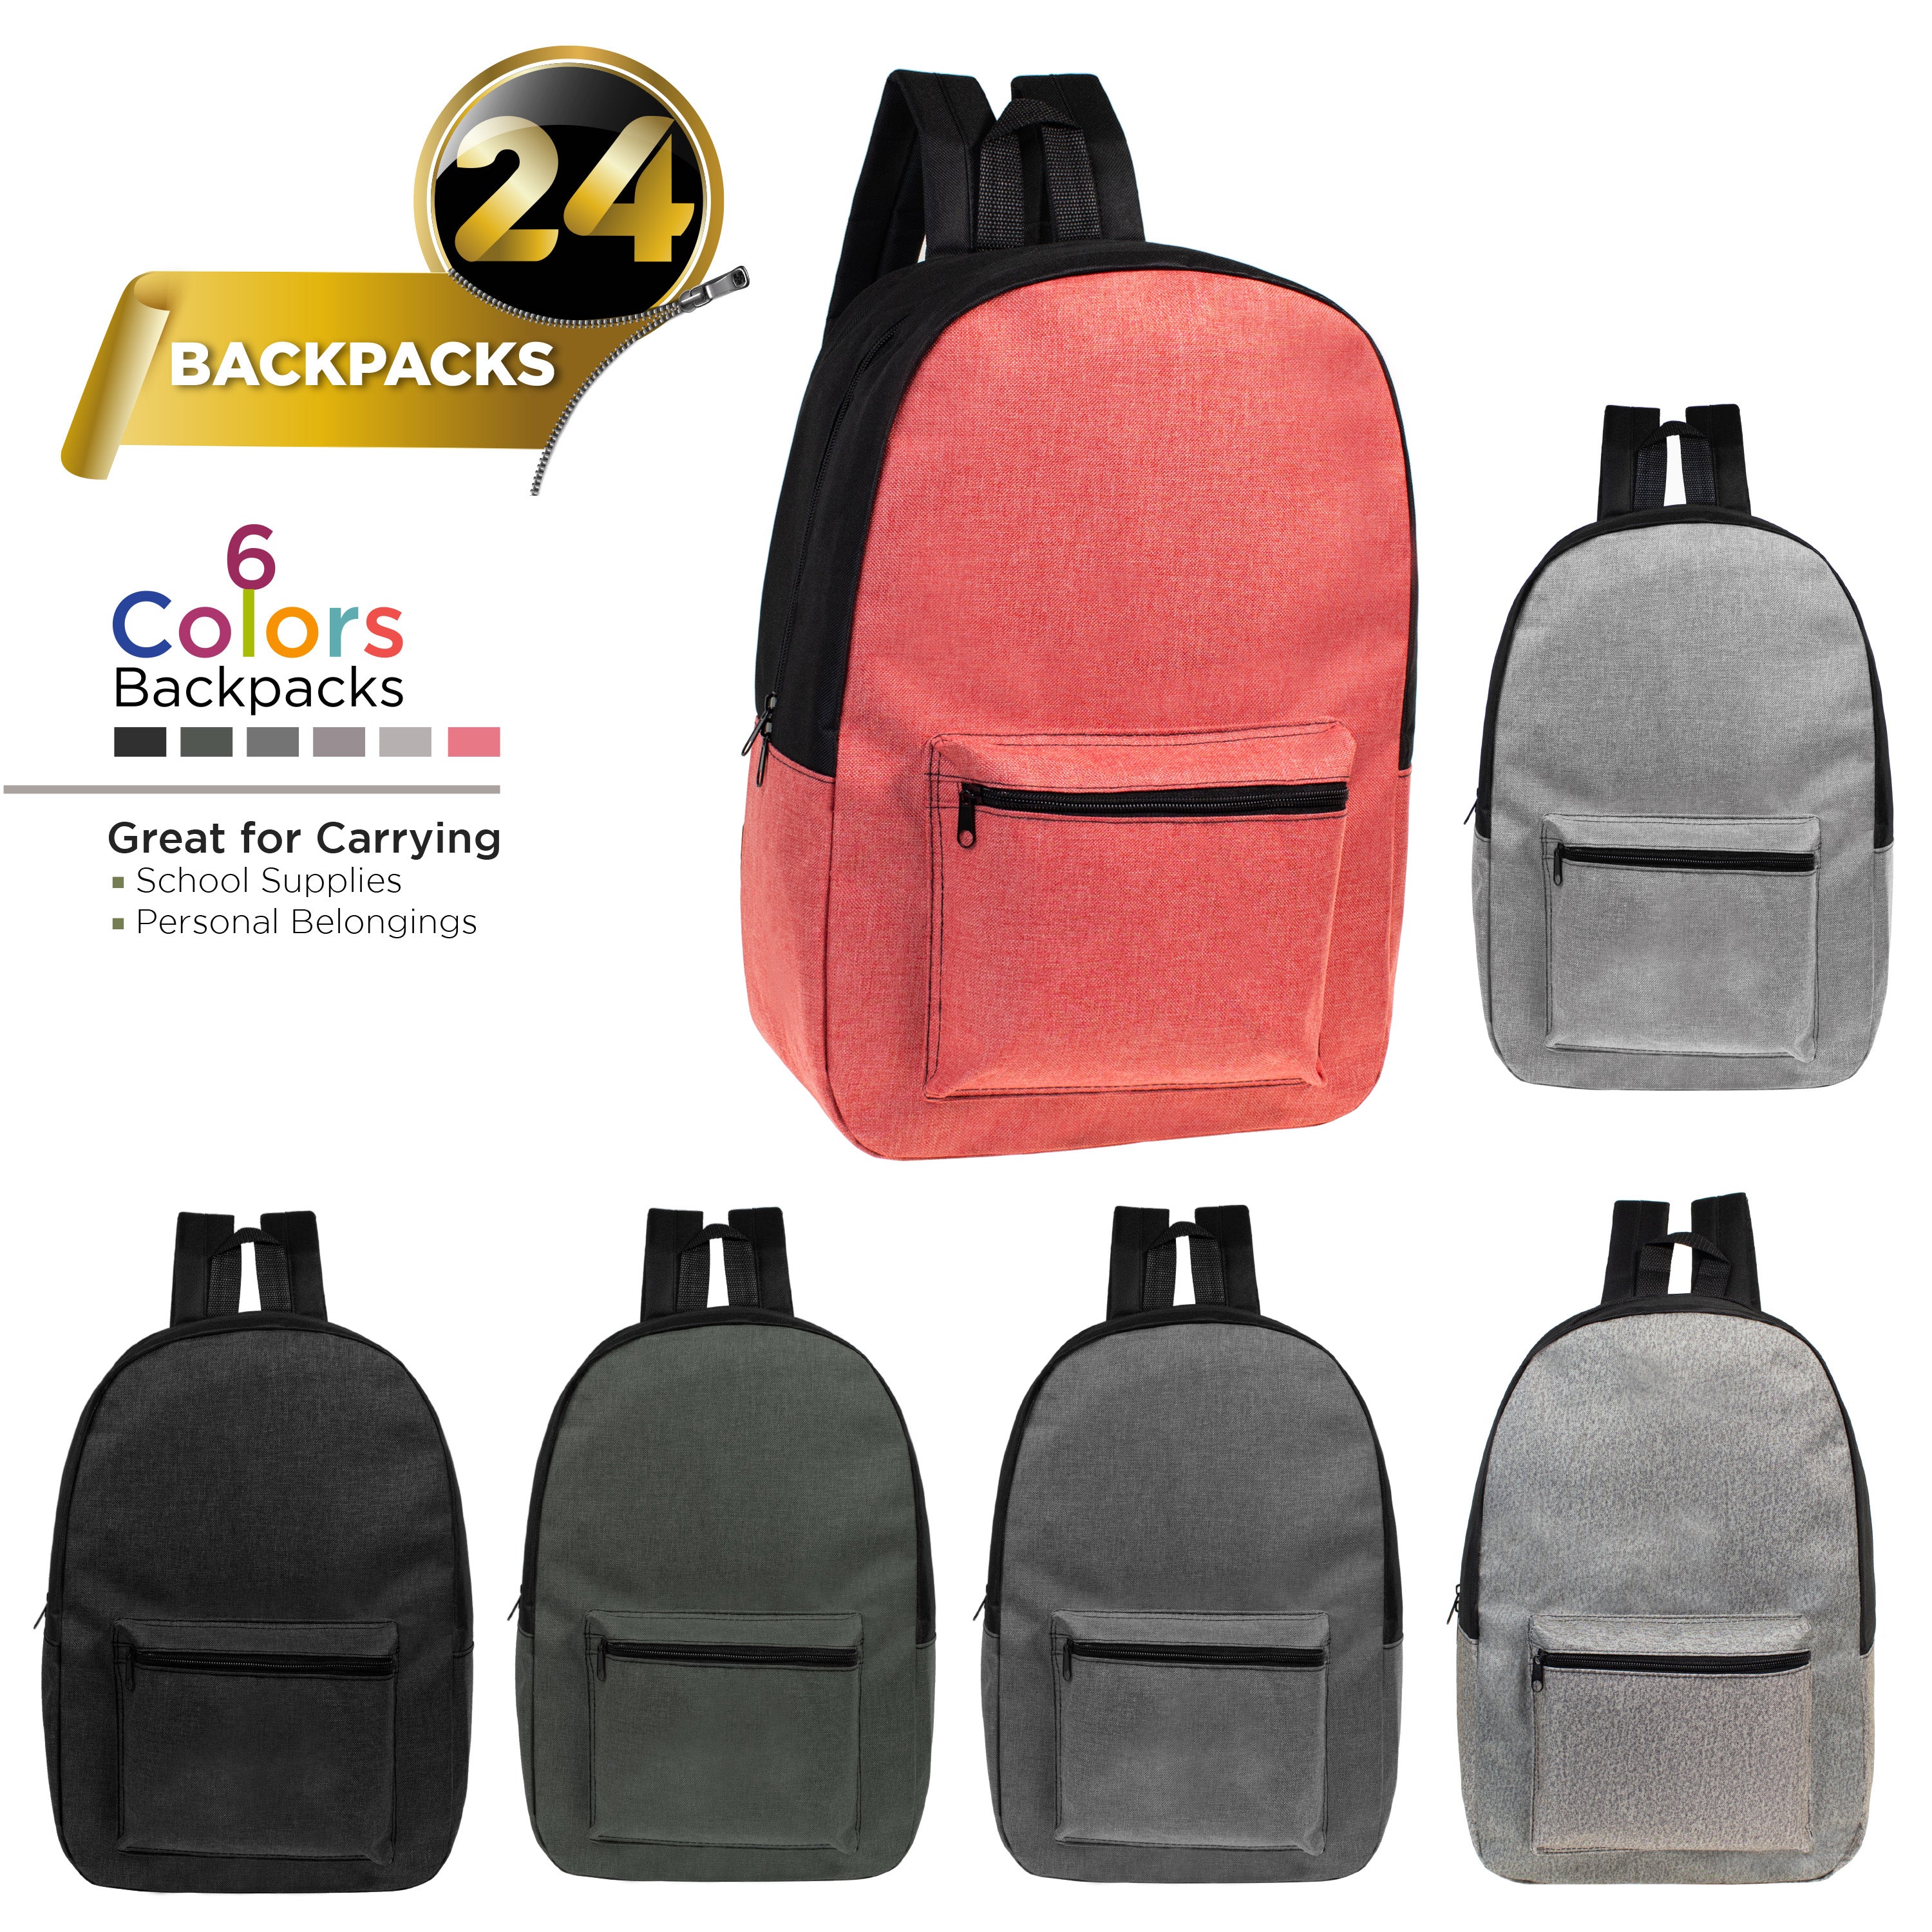 17" Kids Basic Wholesale Backpack in Assorted 6 Colors - Bulk Case of 24 Backpacks